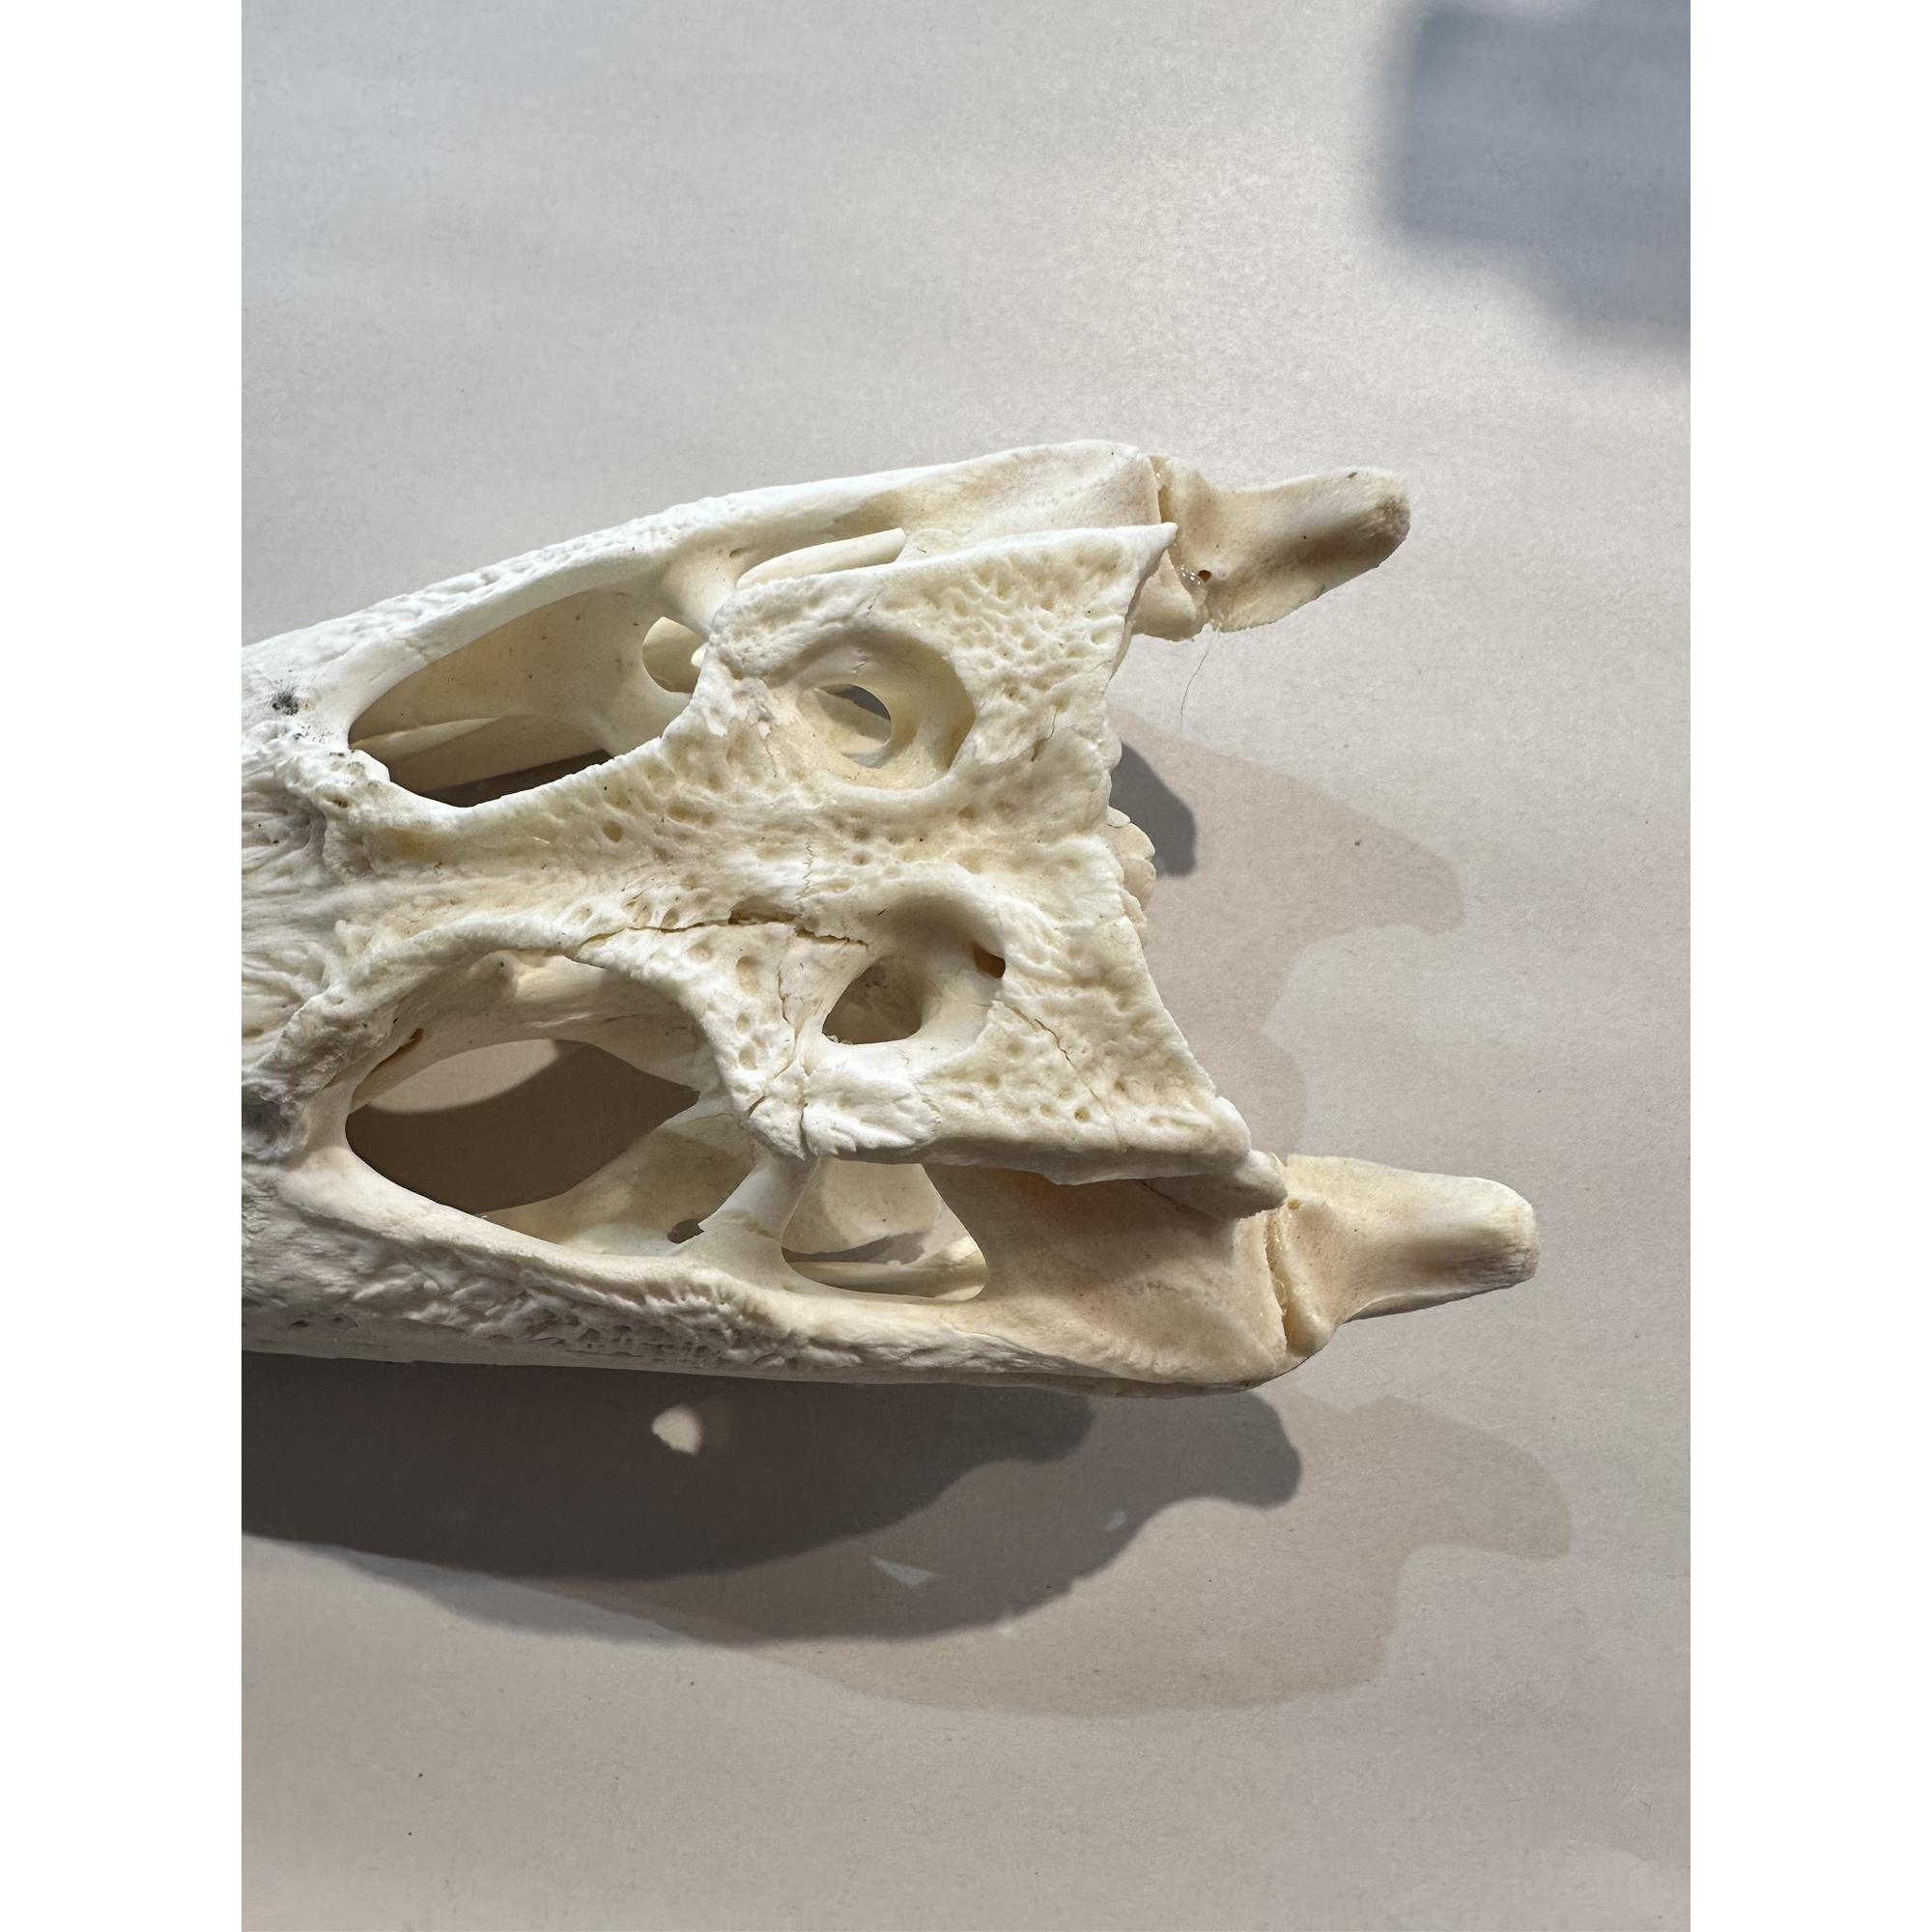 Taxidermy, Alligator Skull, 12 inch beauty Prehistoric Online